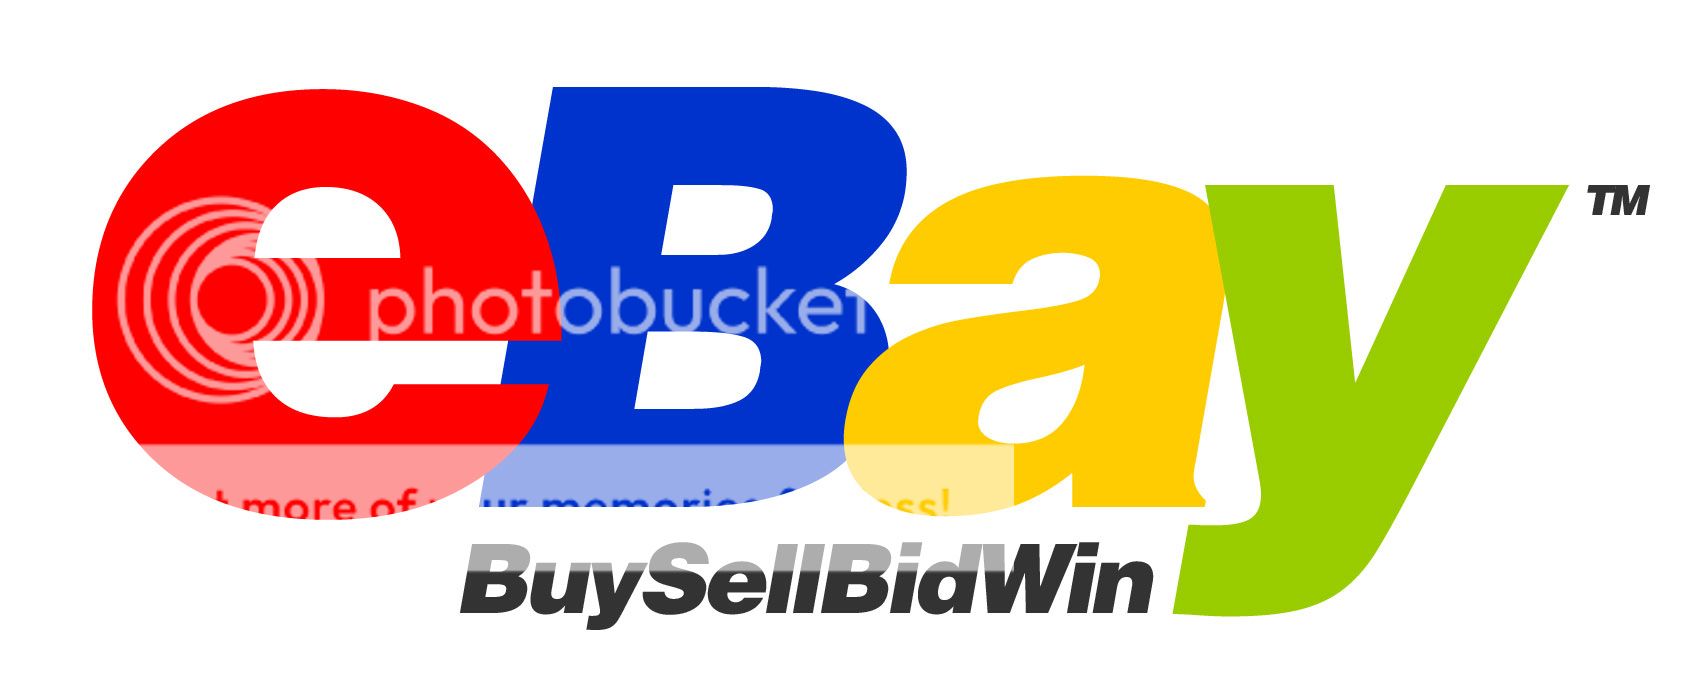 new-ebay-logo.jpg